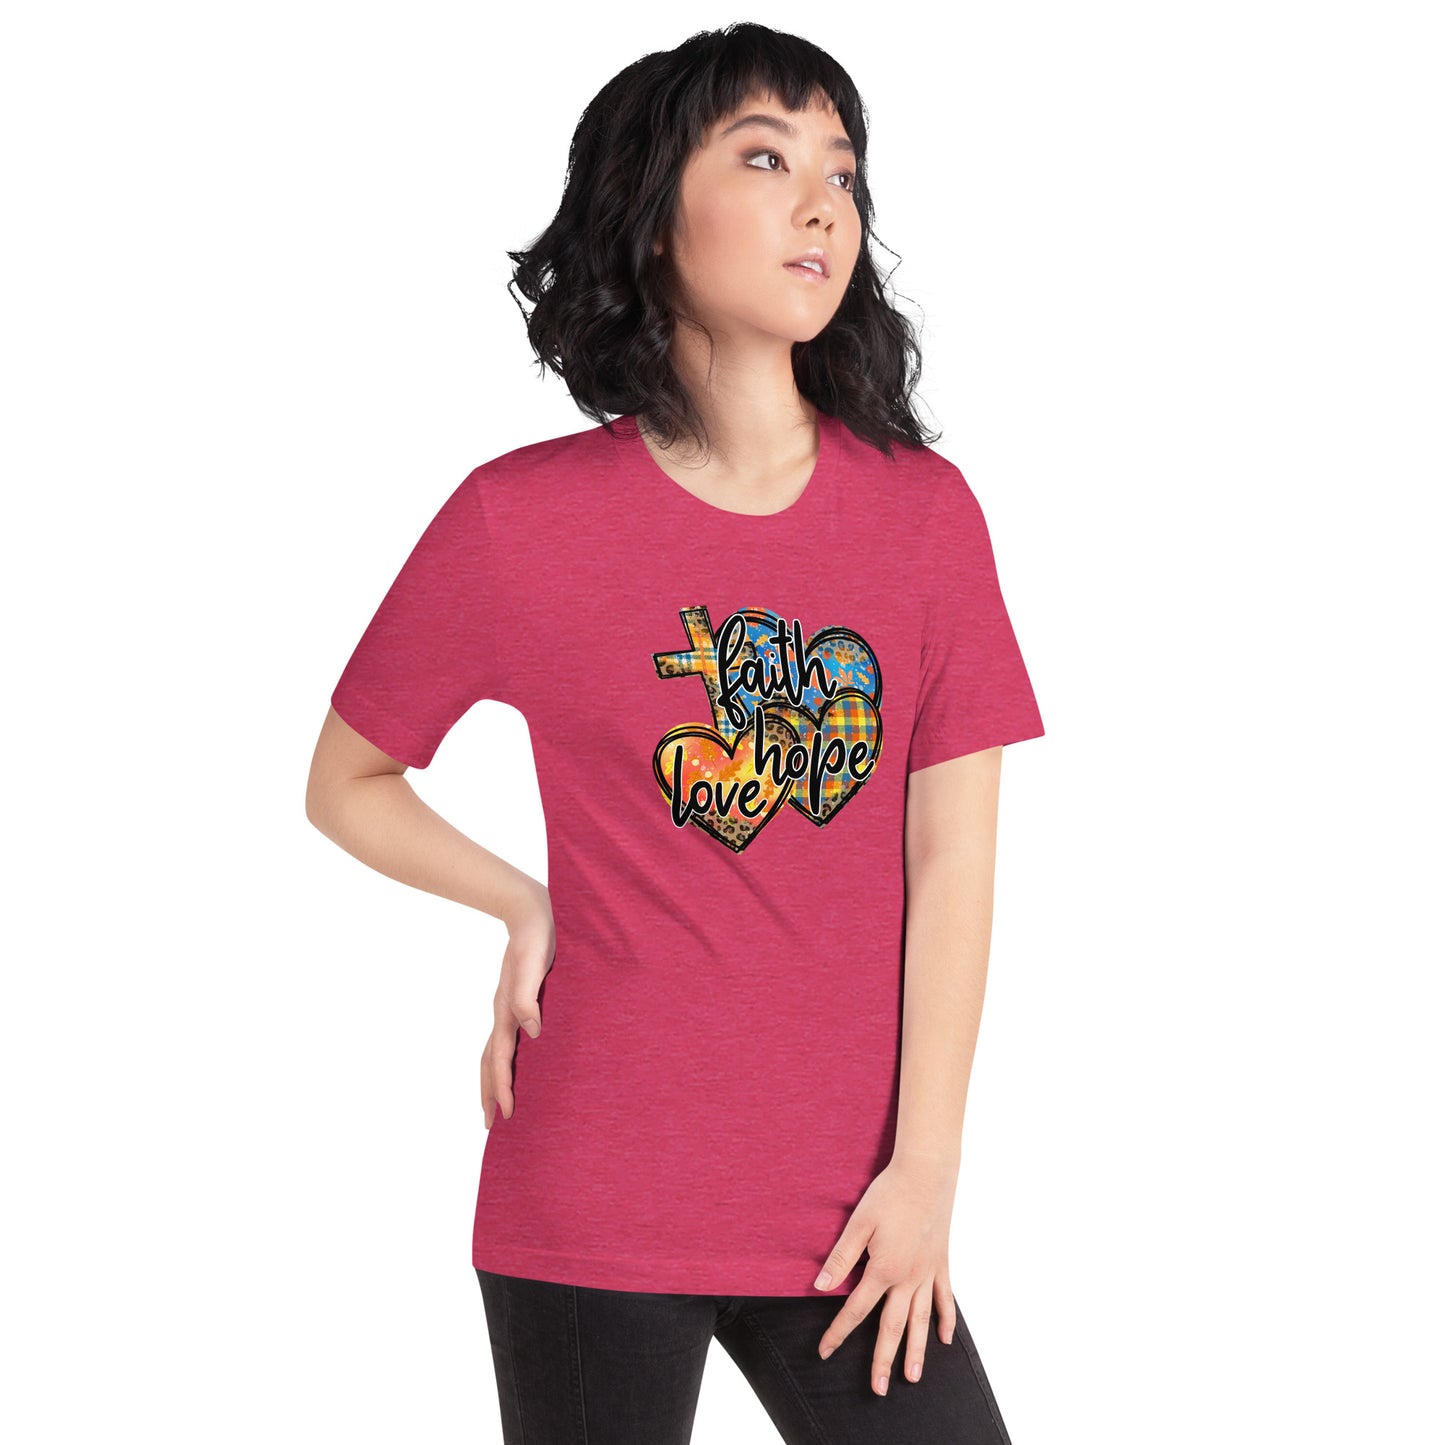 Faith, Hope & Love Unisex t-shirt CedarHill Country Market